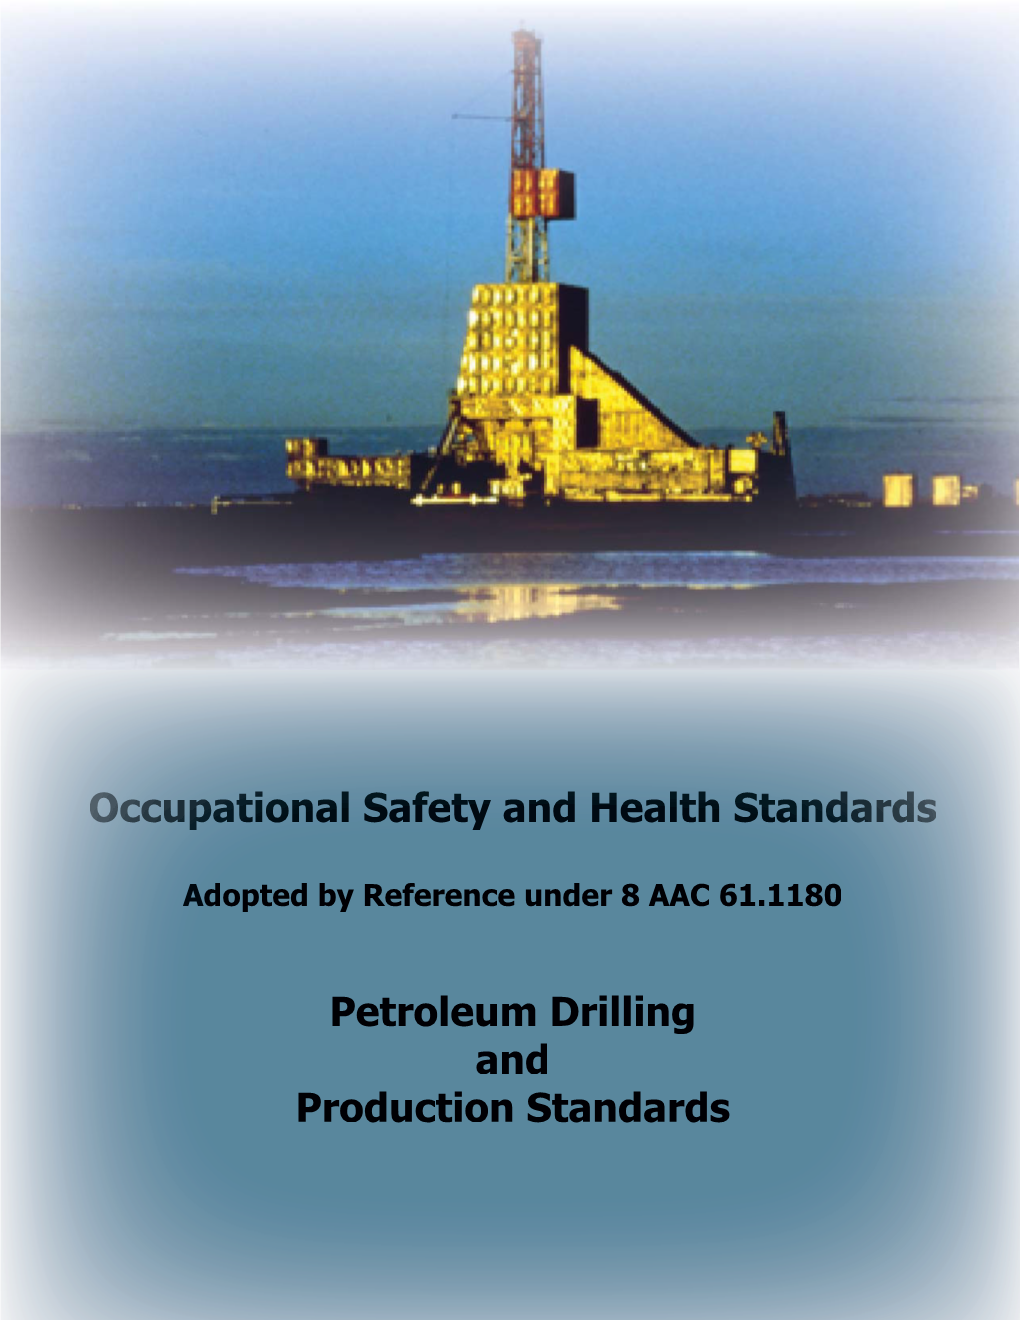 Petroleum Drilling & Production Standards